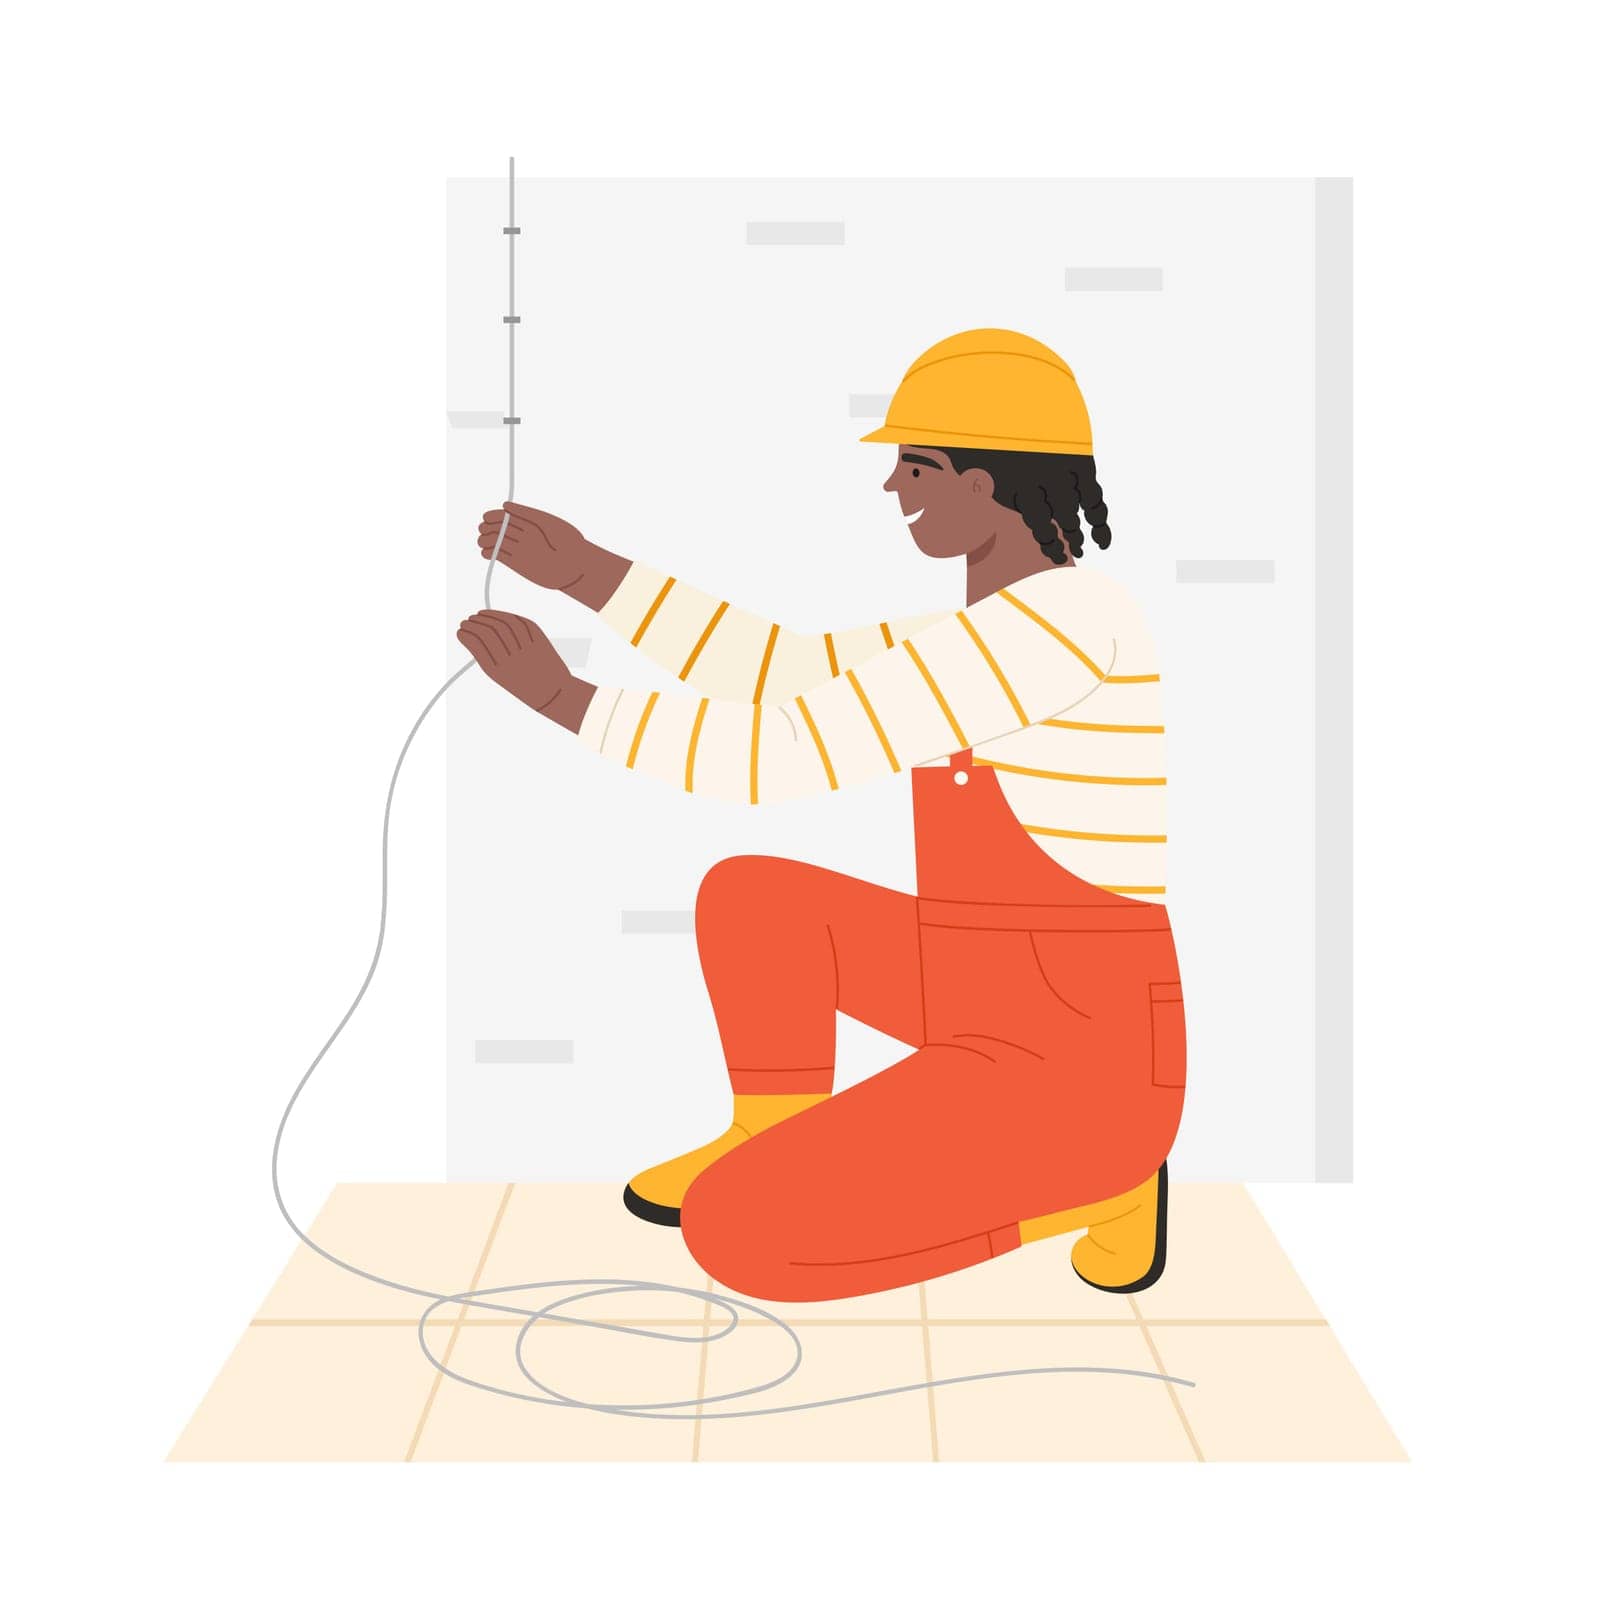 Industrial electrician engineering. Electrician repair service, industrial worker flat vector illustration